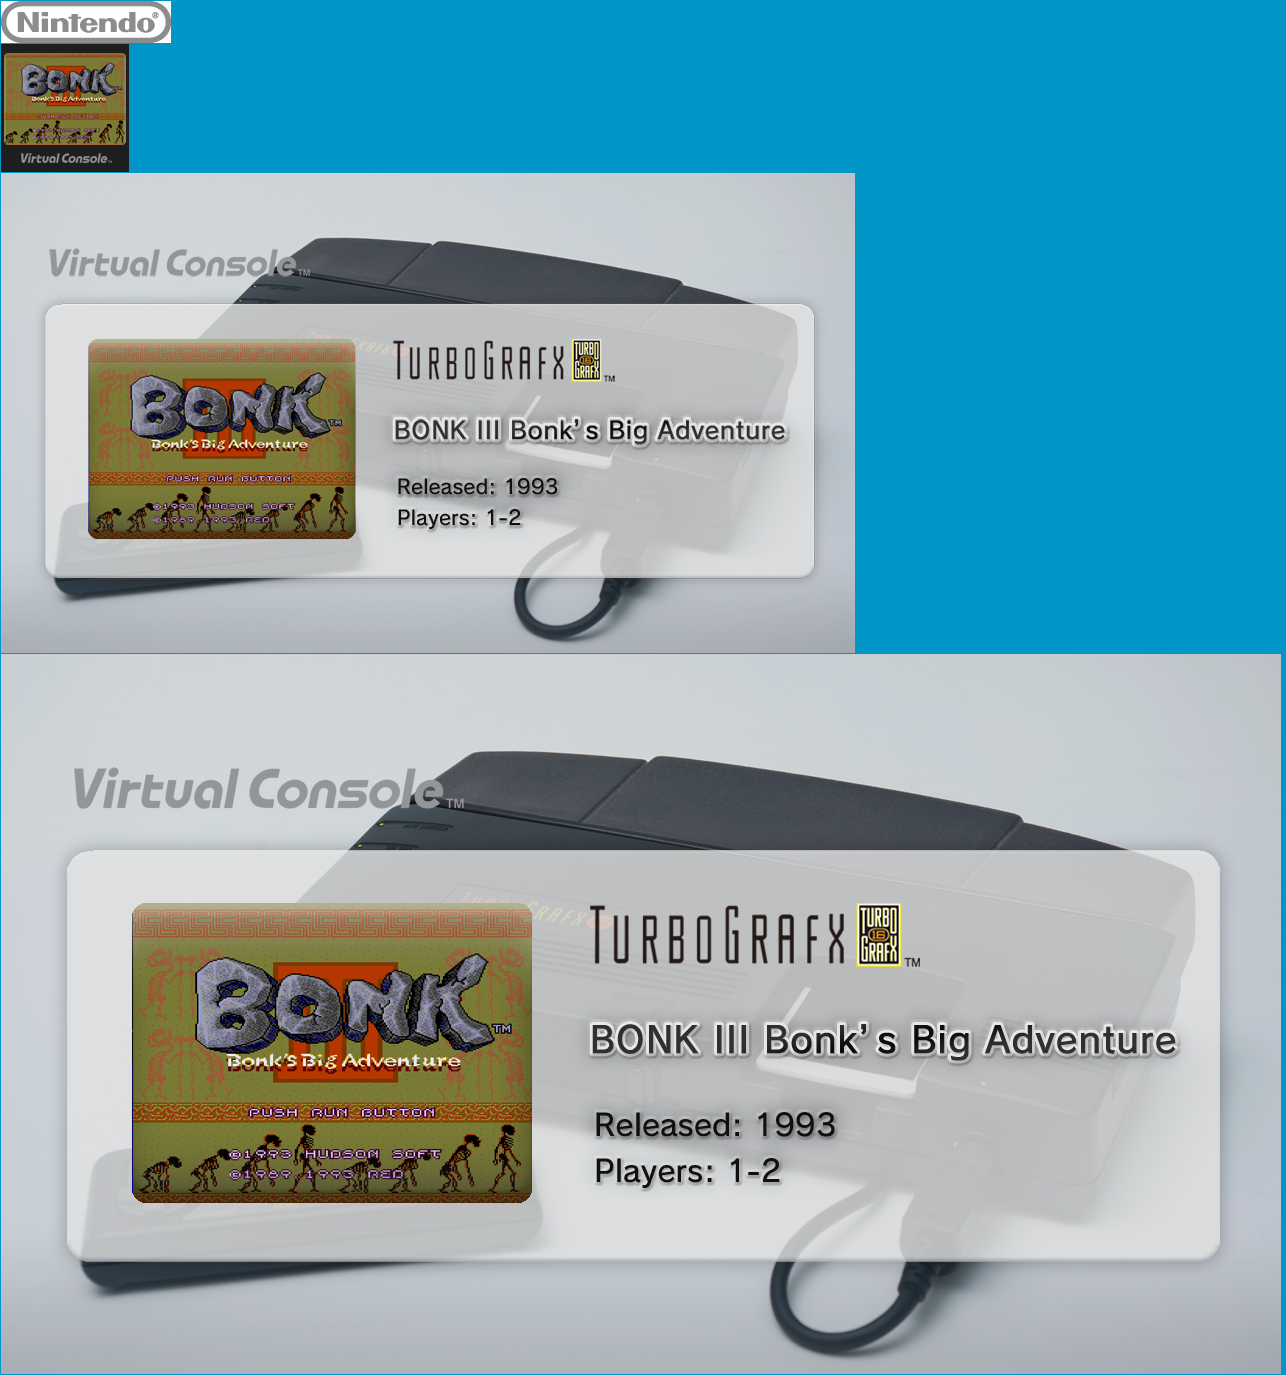 BONK III Bonk's Big Adventure